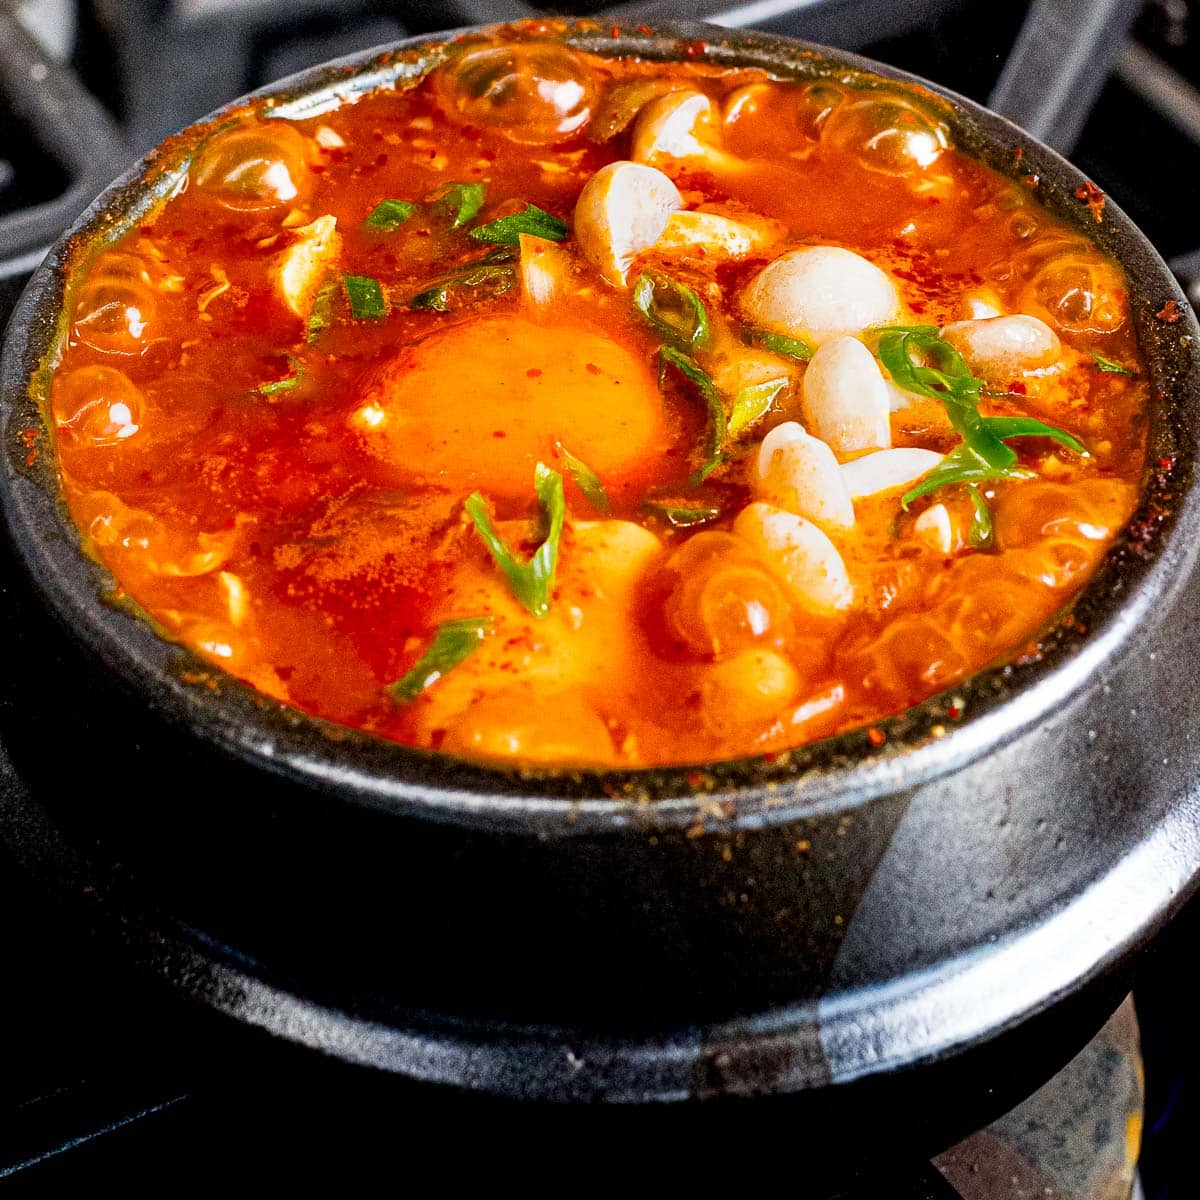 Soondubu jjigae with mushrooms, soft tofu, and egg cooking in an earthenware pot.